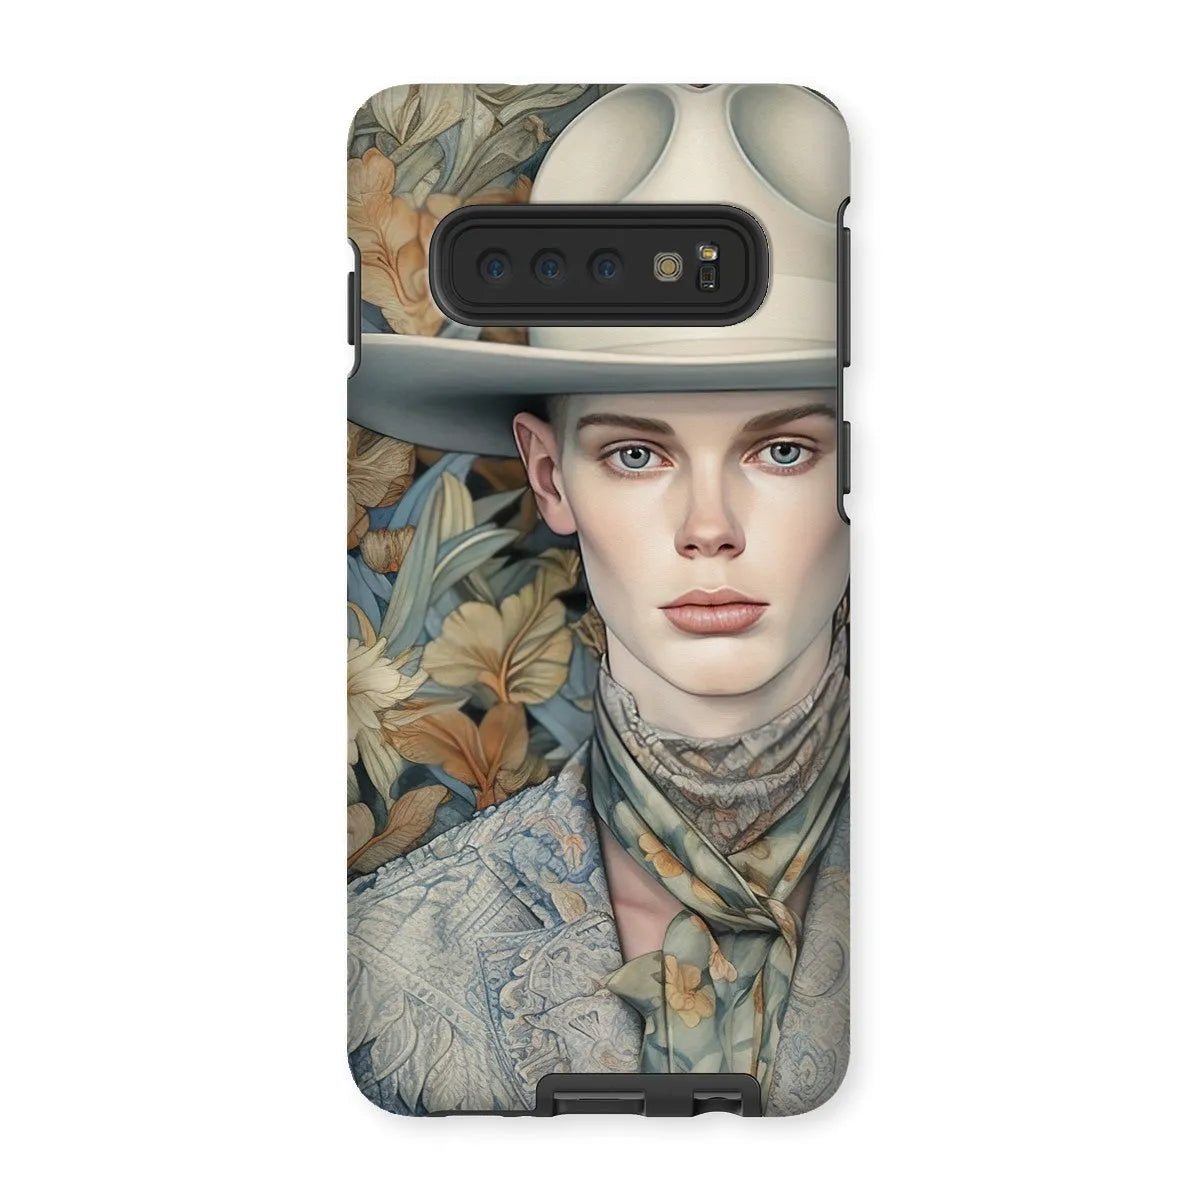 Jasper - Dandy Twink Cowboy Aesthetic Art Phone Case - Samsung Galaxy S10 / Matte - Mobile Phone Cases - Aesthetic Art